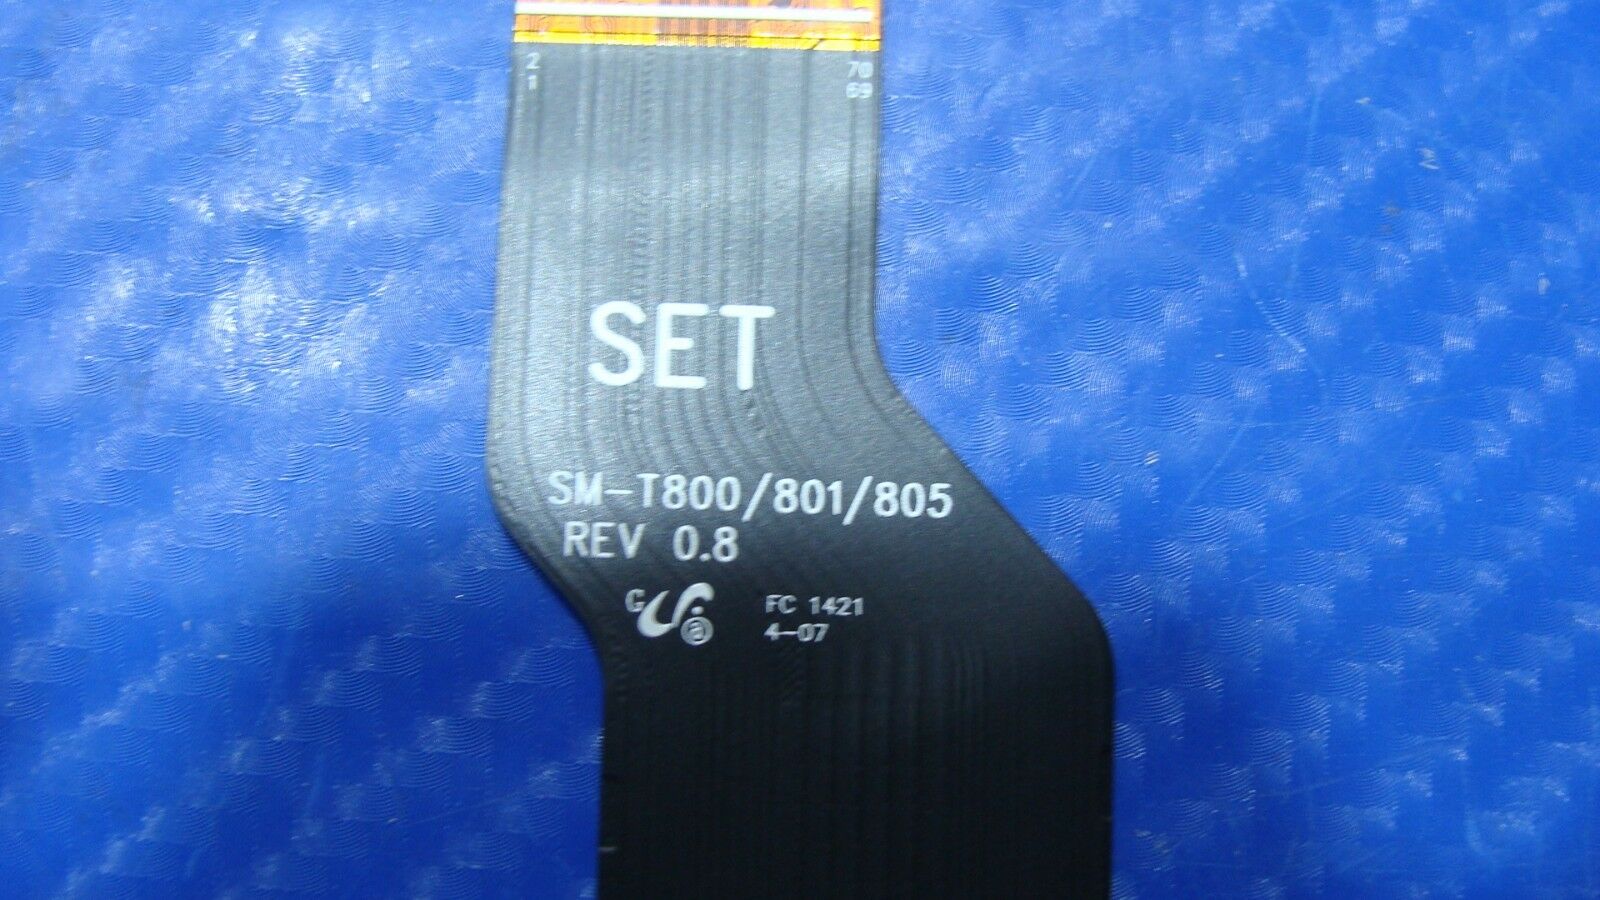 Samsung Galaxy Tab S SM-T800 10.5